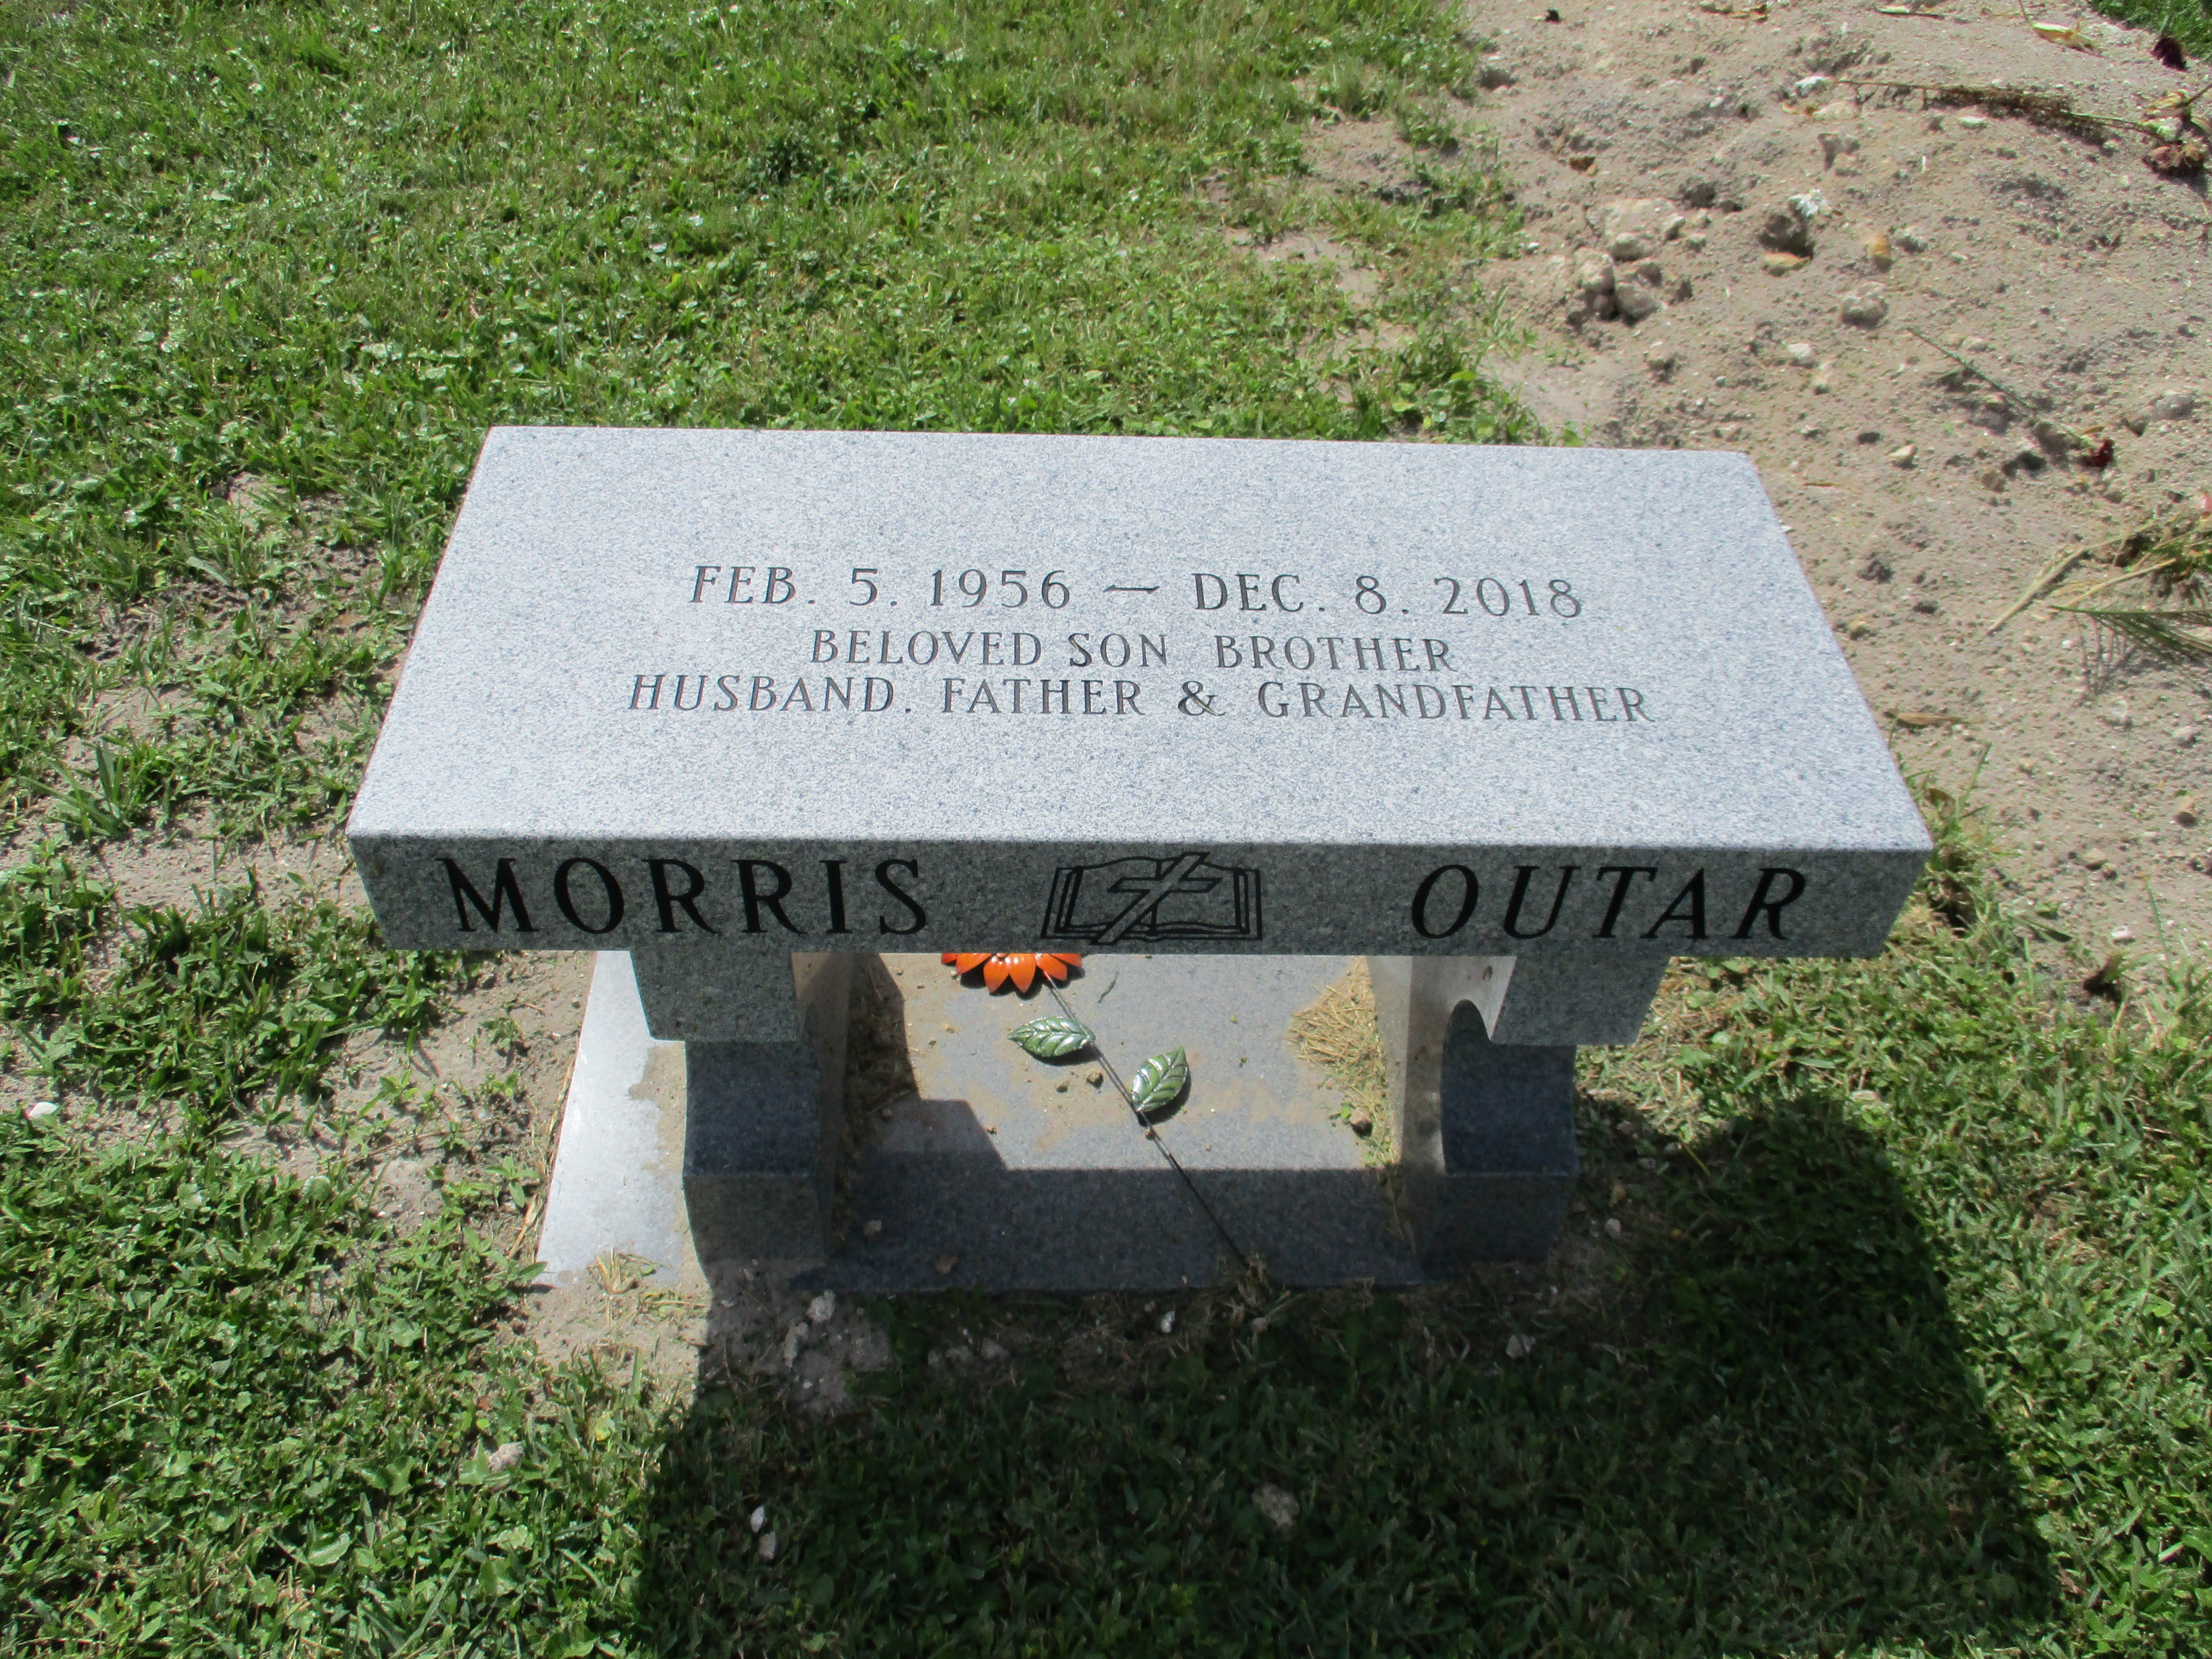 Morris Outar